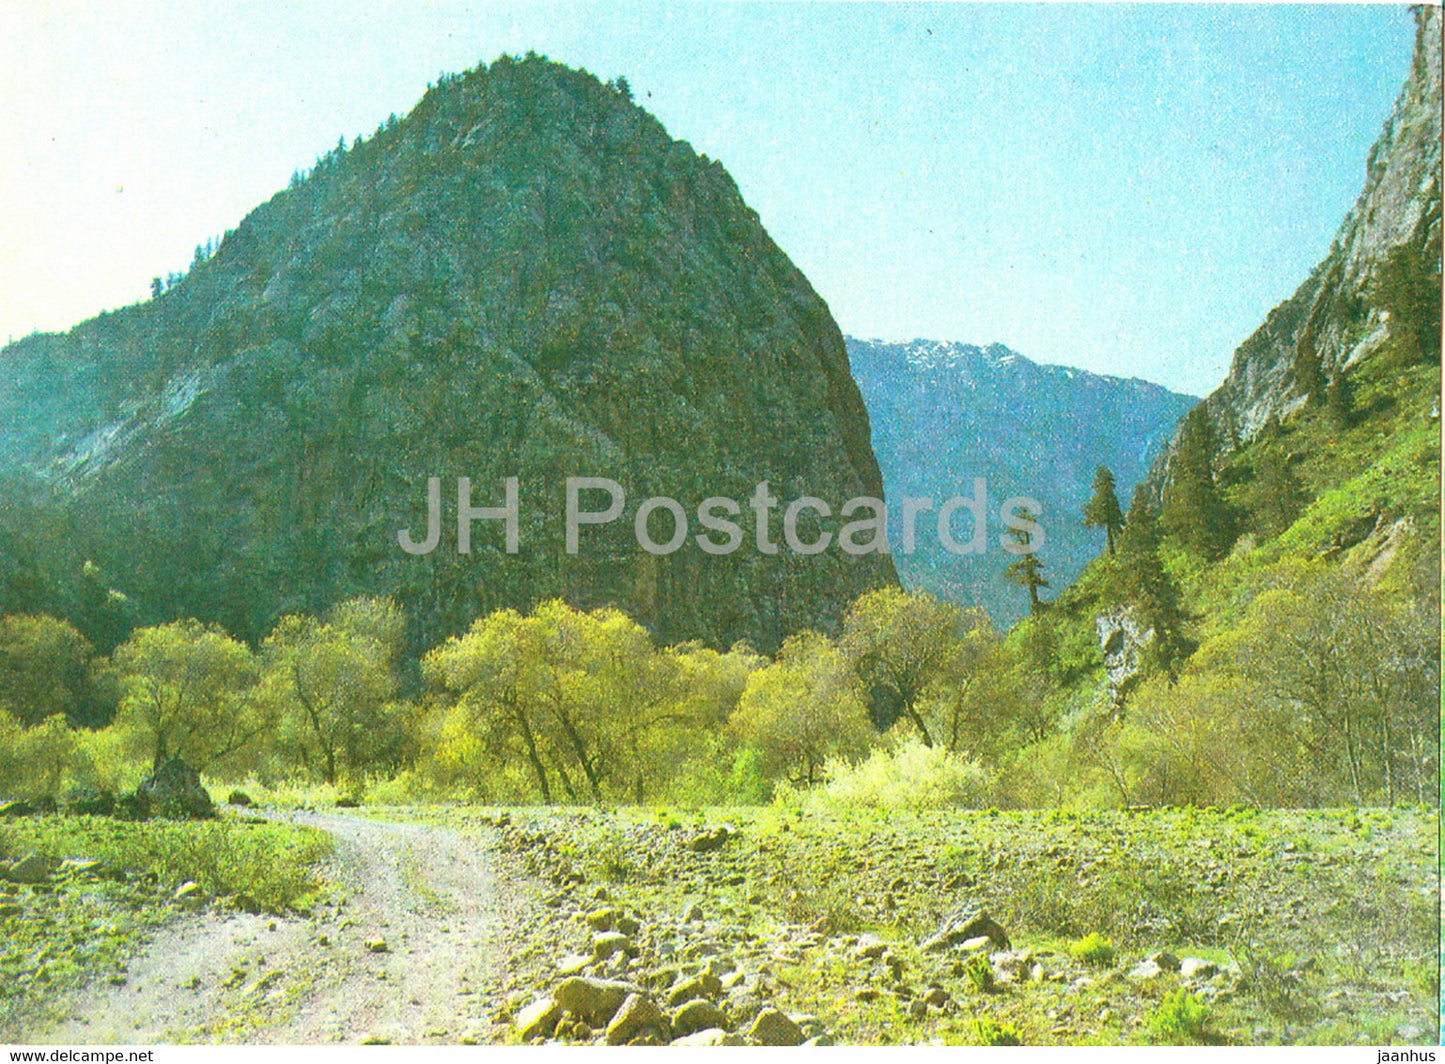 mountain road - Nature Trails - 1981 - Uzbekistan USSR - unused - JH Postcards